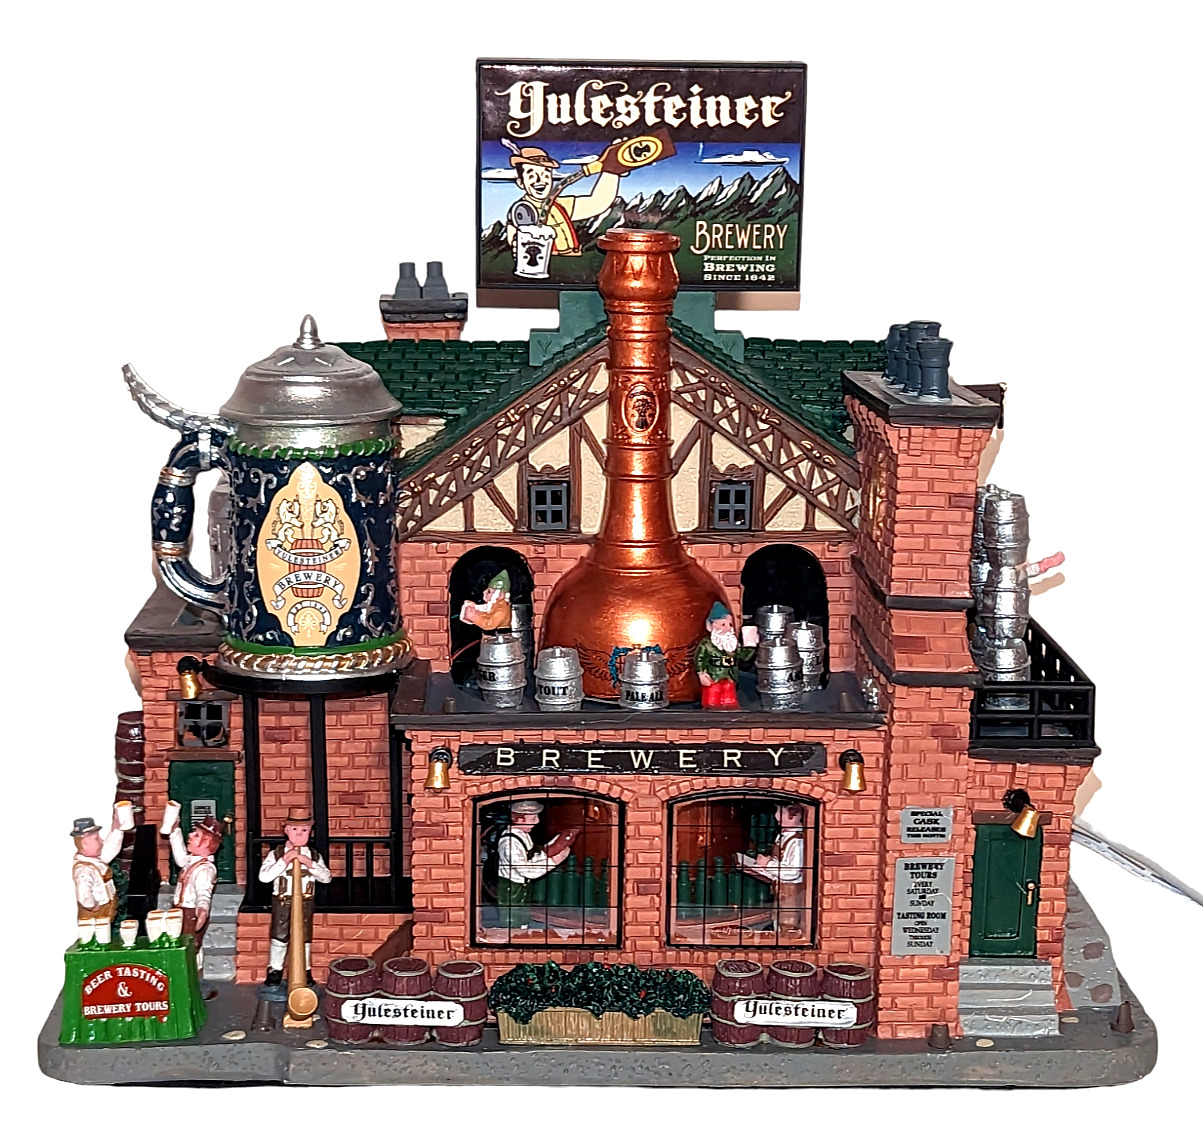 Lemax Yulesteiner Brewery German Beer Animated Sound Lighted Caddington Village